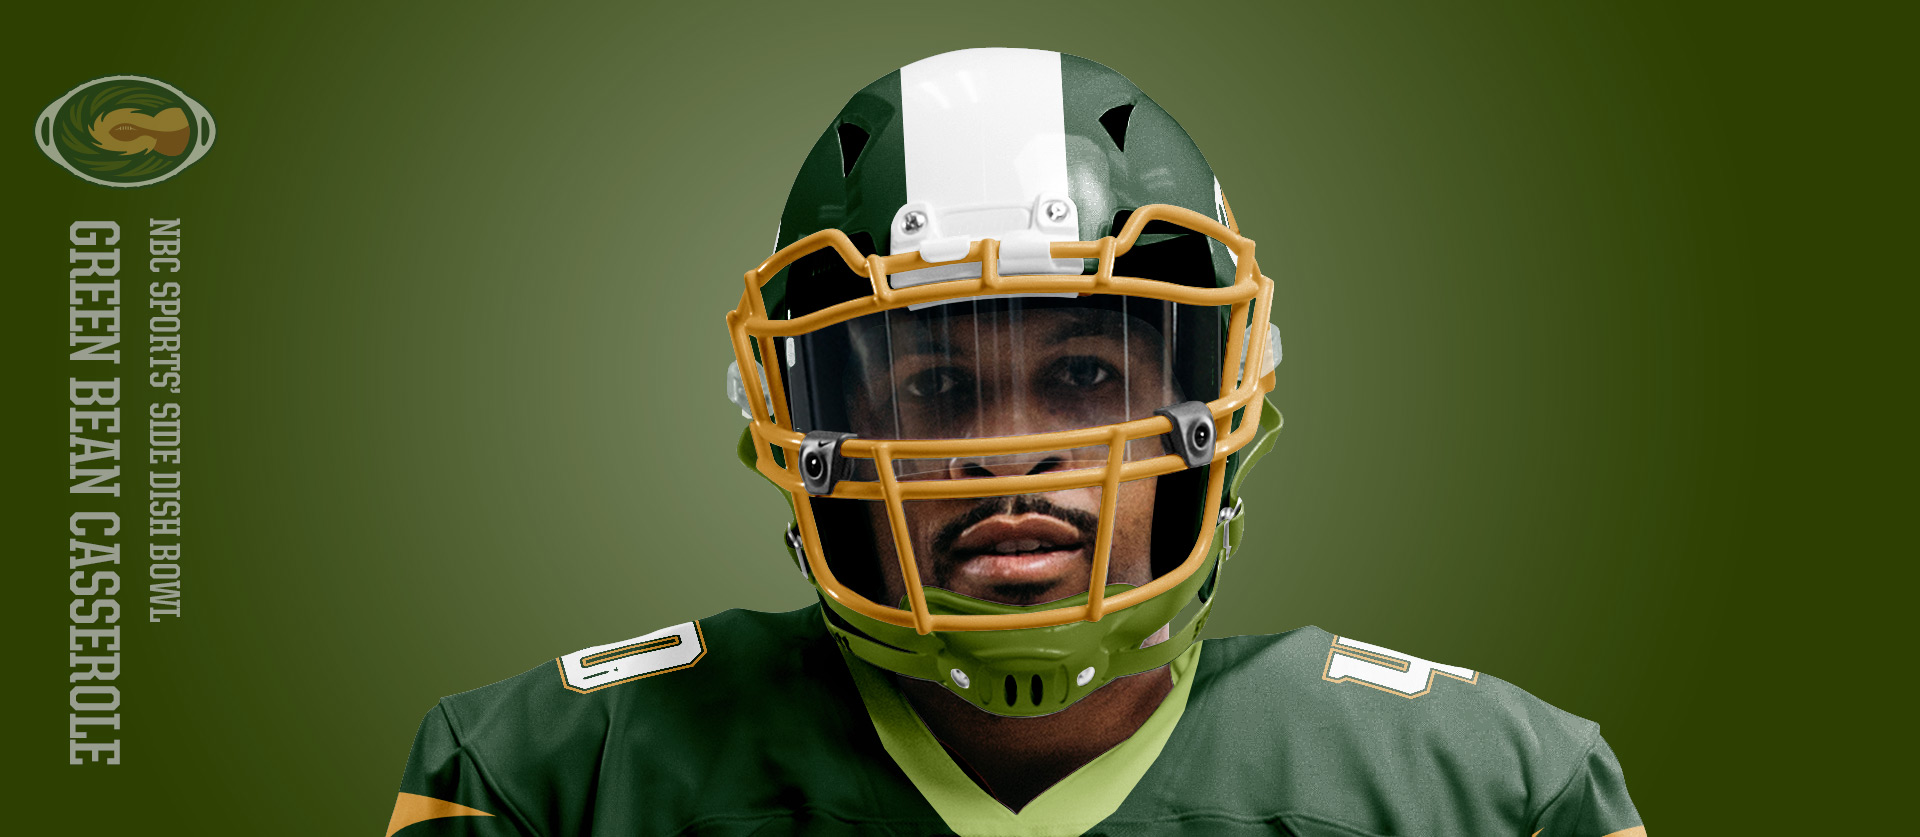 Green Bean Casseroles Helmet Front - Football Uniform Design for NBC Sports Thanksgiving Side Dish Bowl